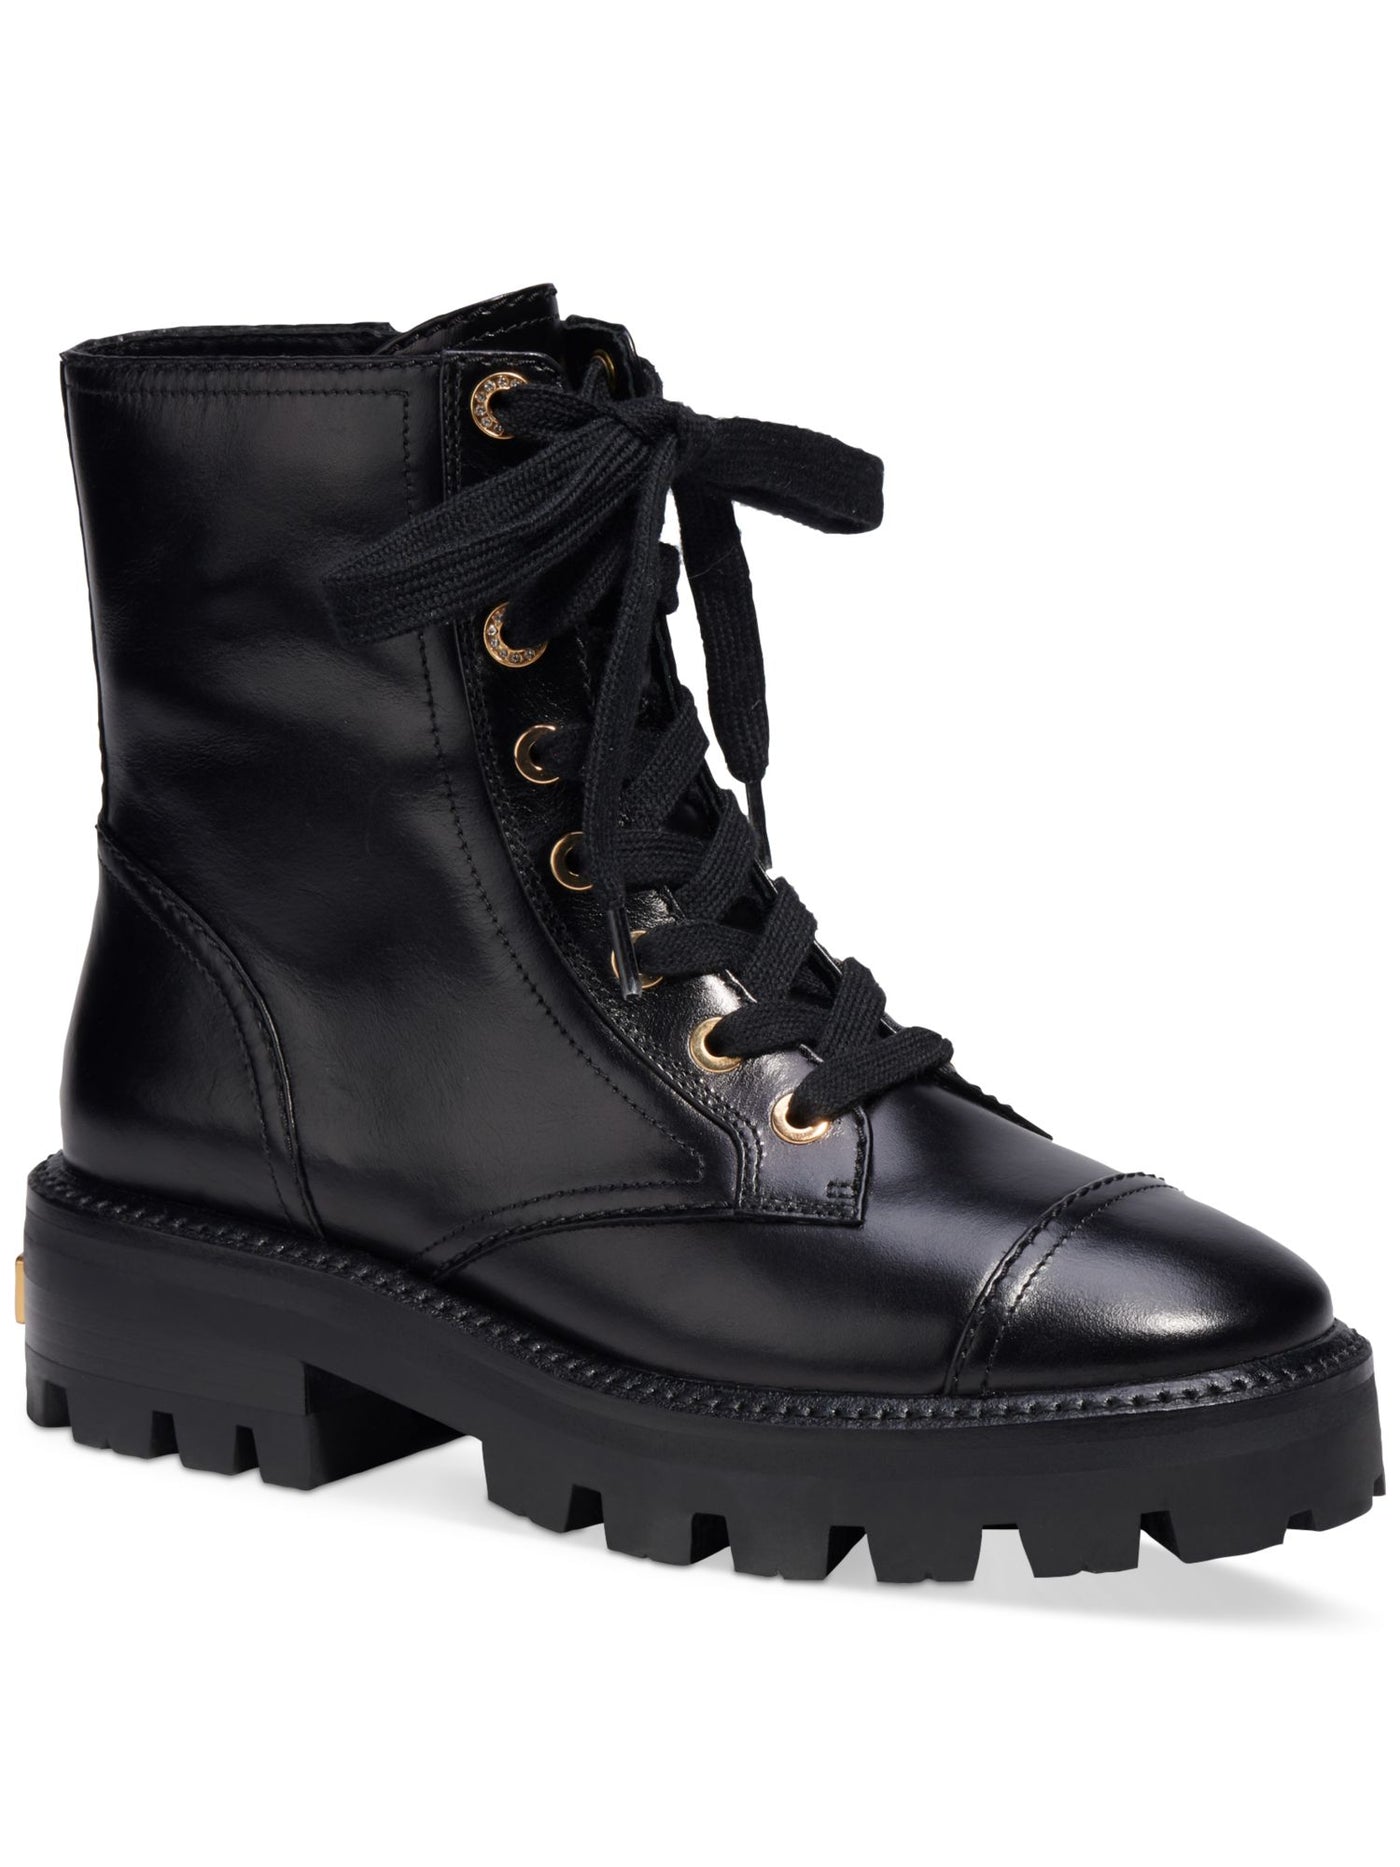 KATE SPADE NEW YORK Womens Black Merritt Round Toe Block Heel Lace-Up Leather Combat Boots 6 B